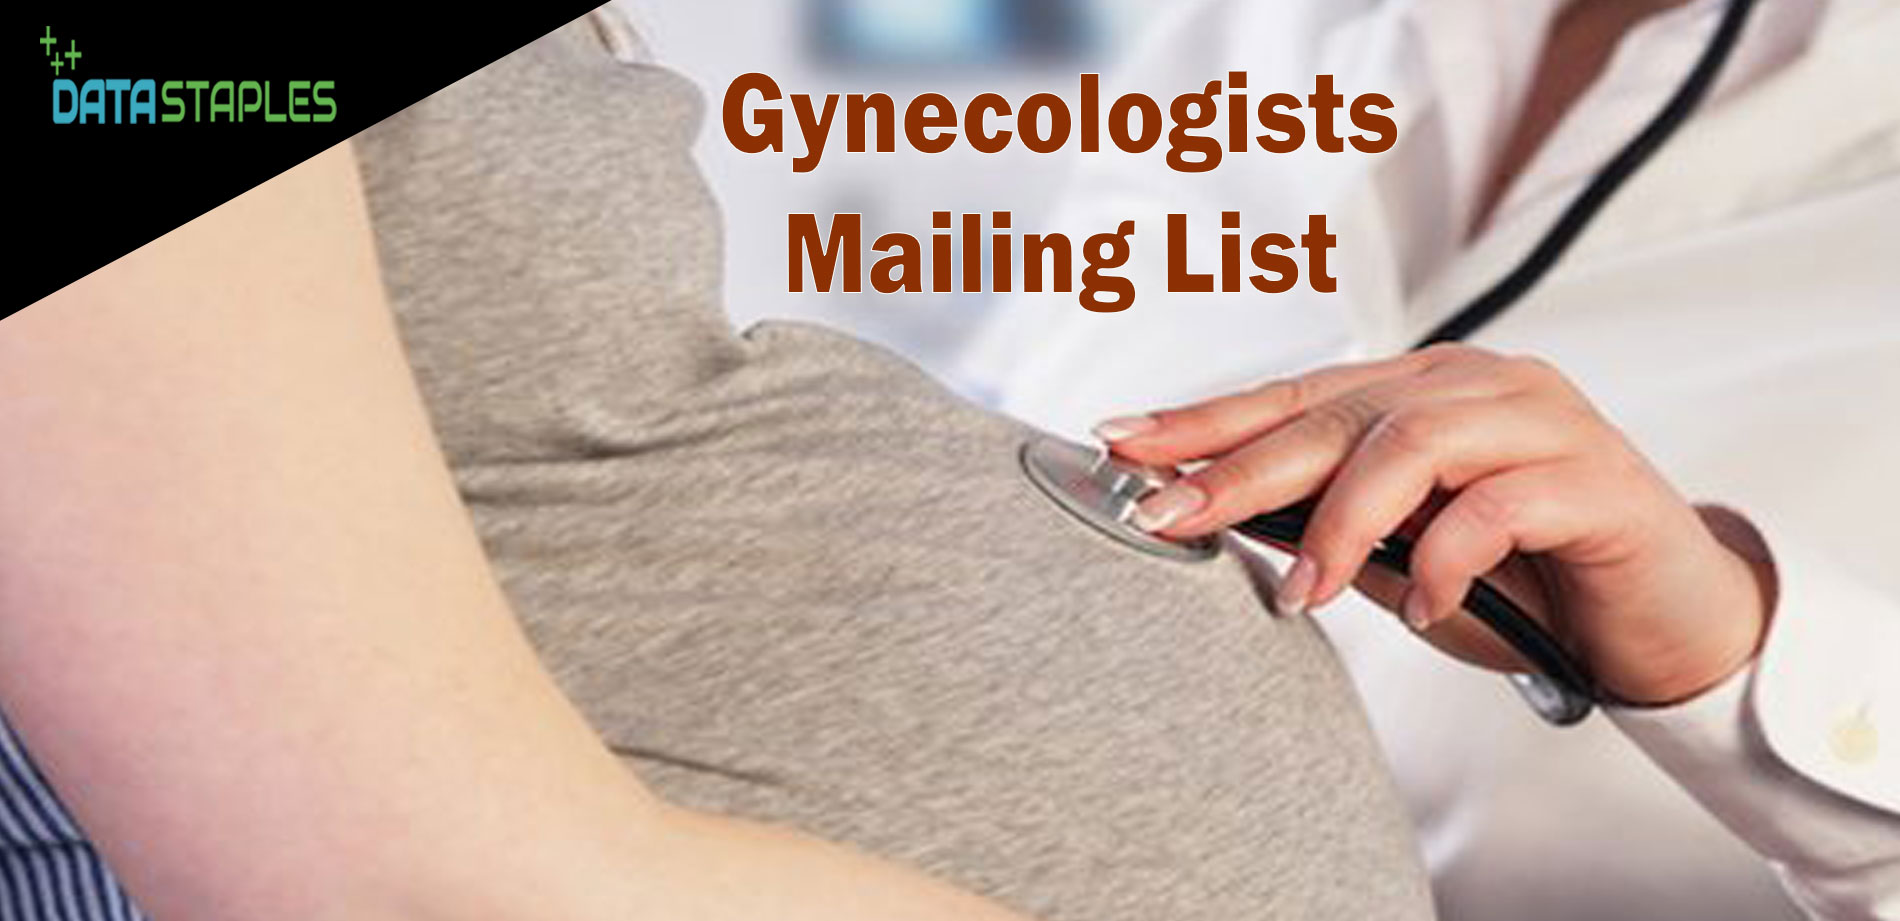 Gynecologists Mailing List | DataStaplesMailing List | DataStaplesMailing List | DataStaples